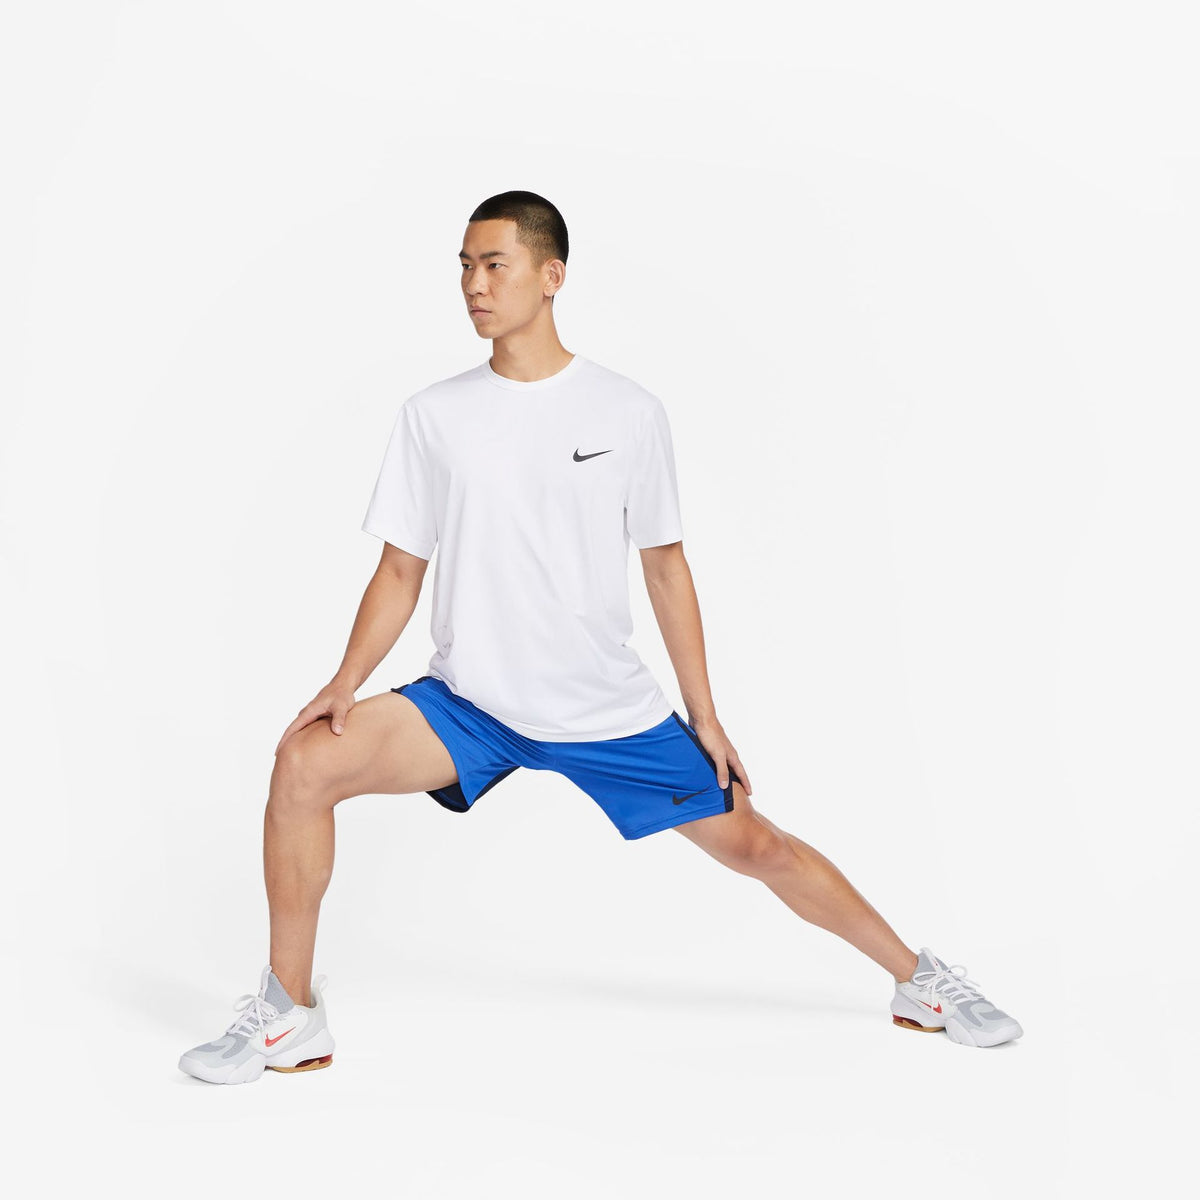 Áo tay ngắn thể thao Nam Dri-FIT UV Hyverse Men's Short-Sleeve Fitness Top